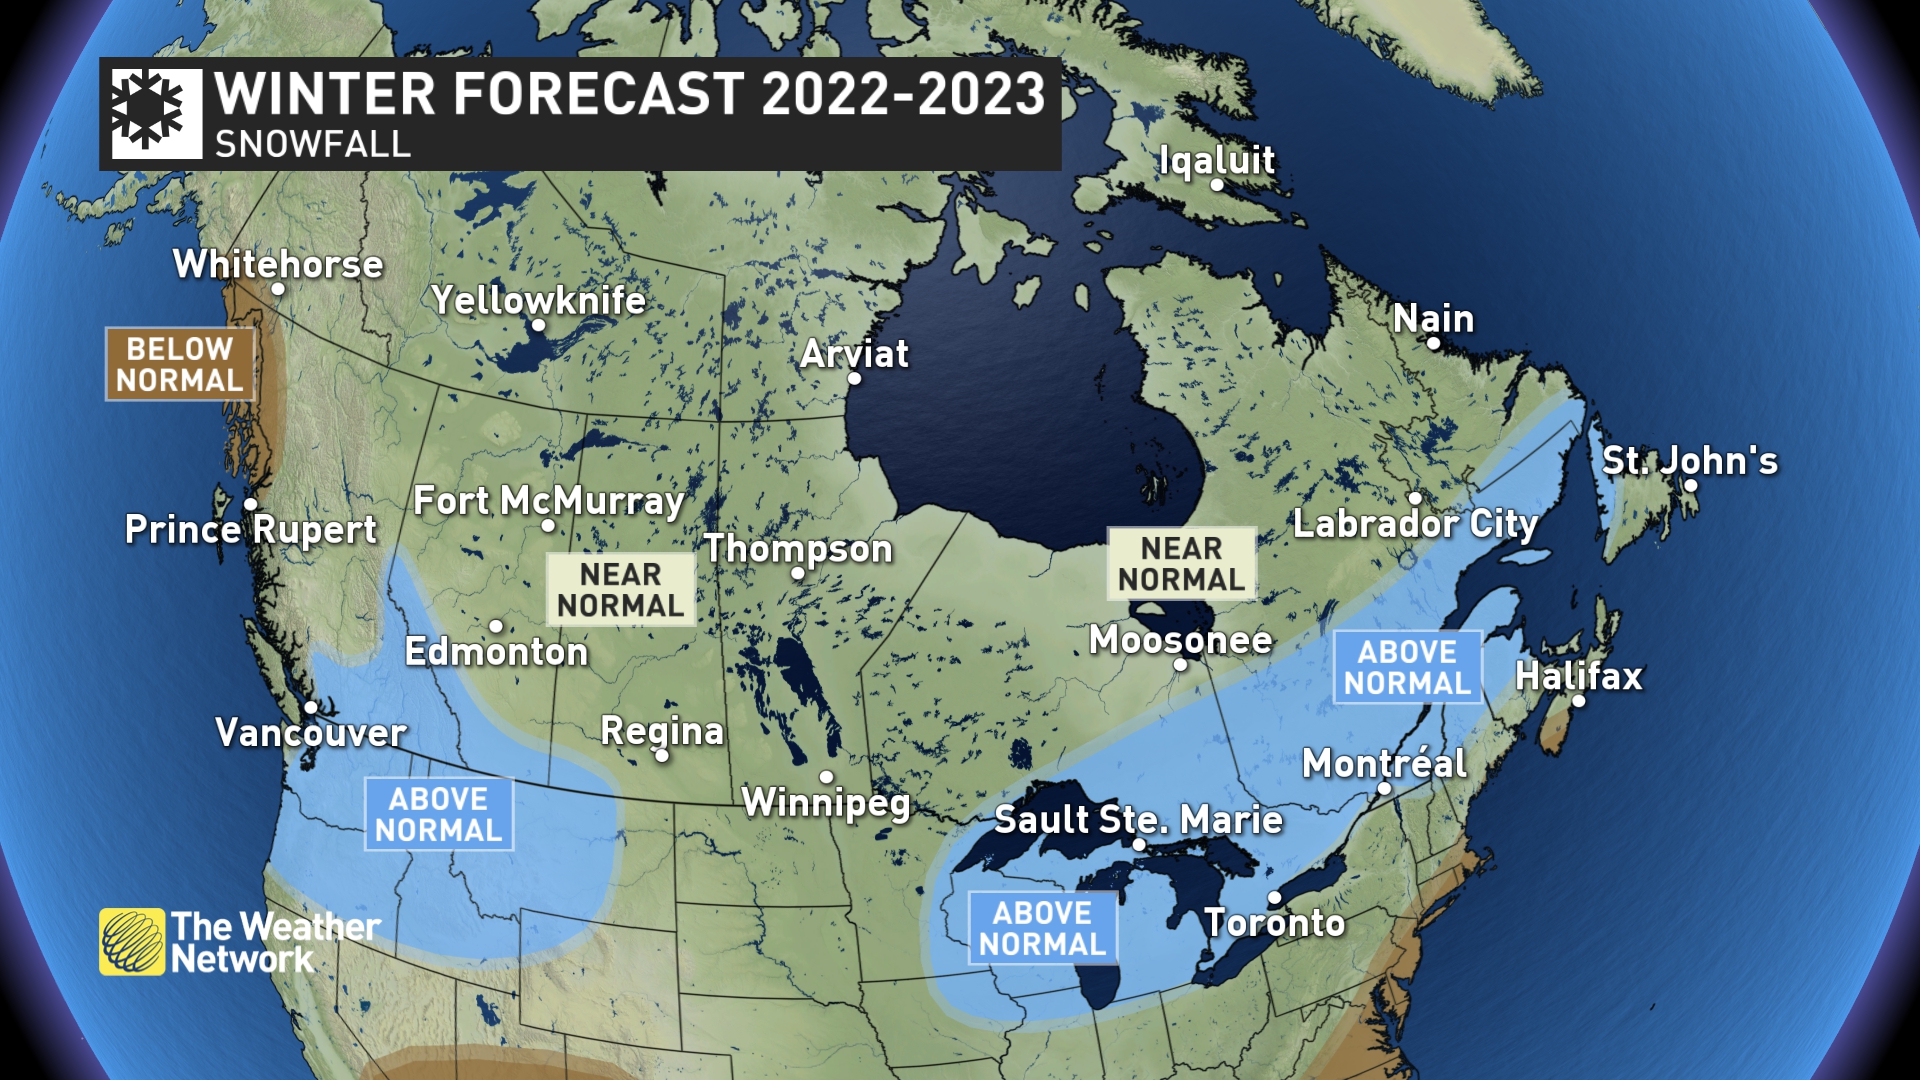 National Snowfall Outlook for Winter 2022-23